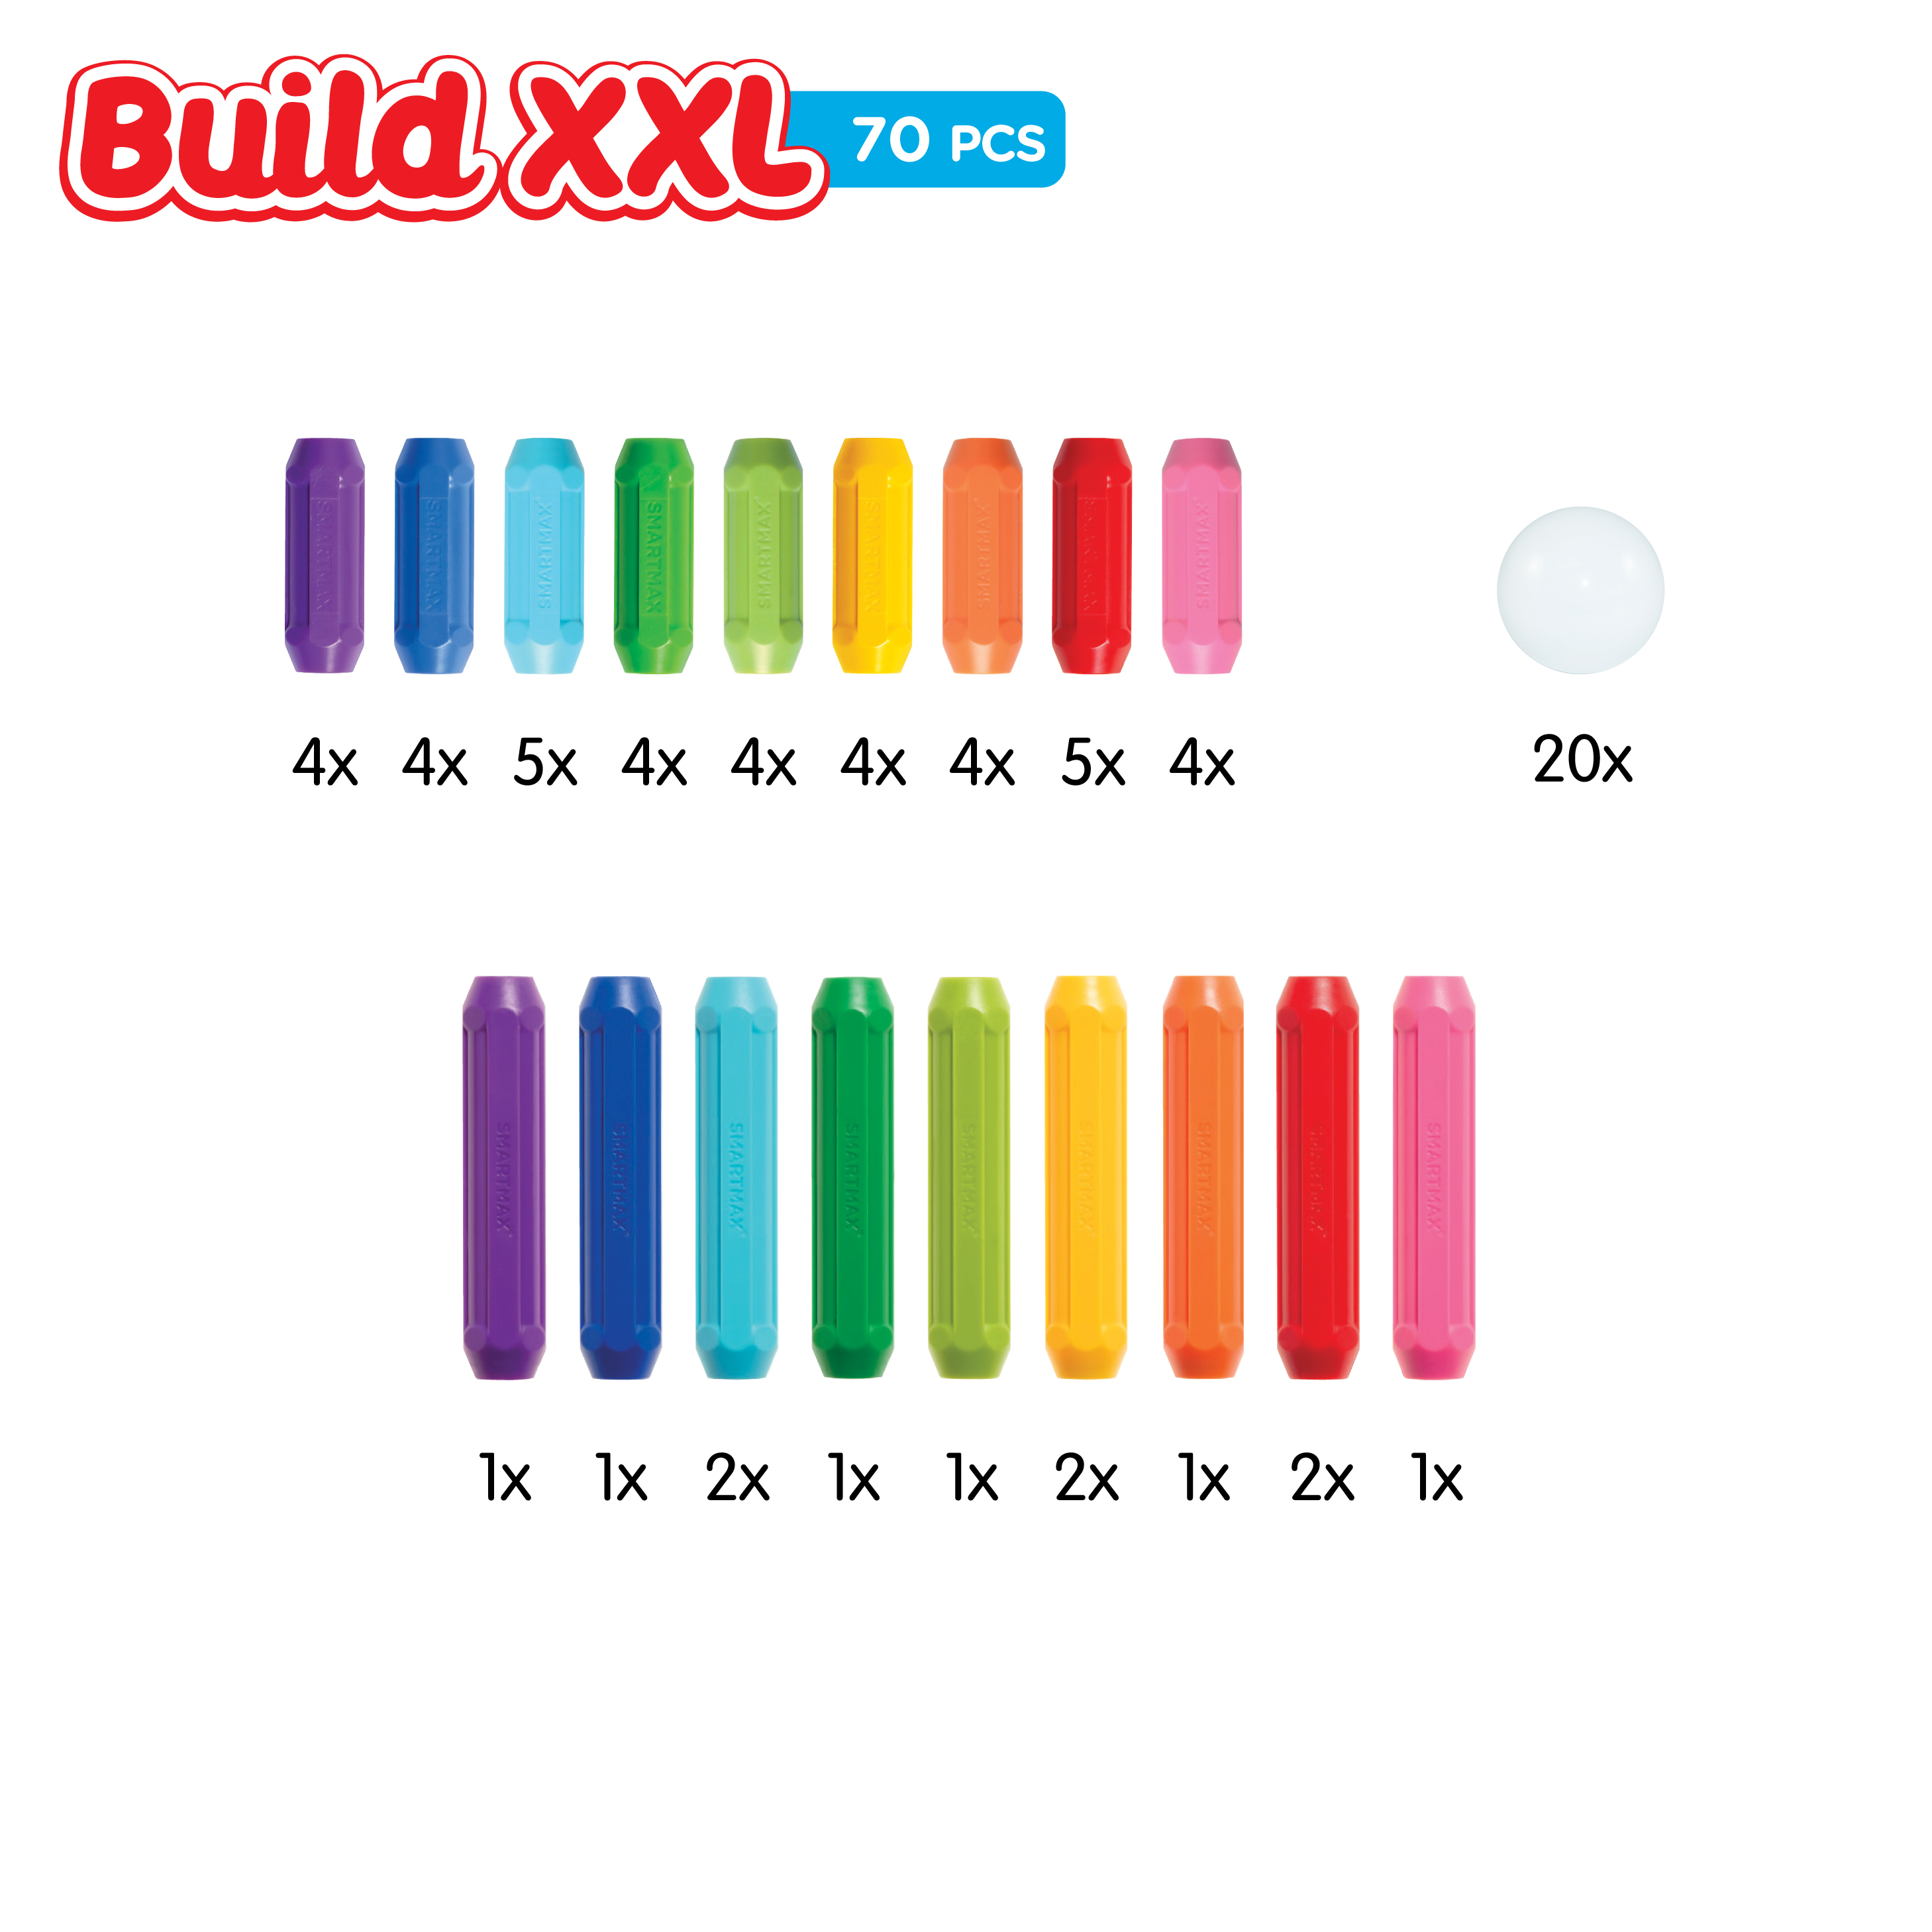 Build XXL